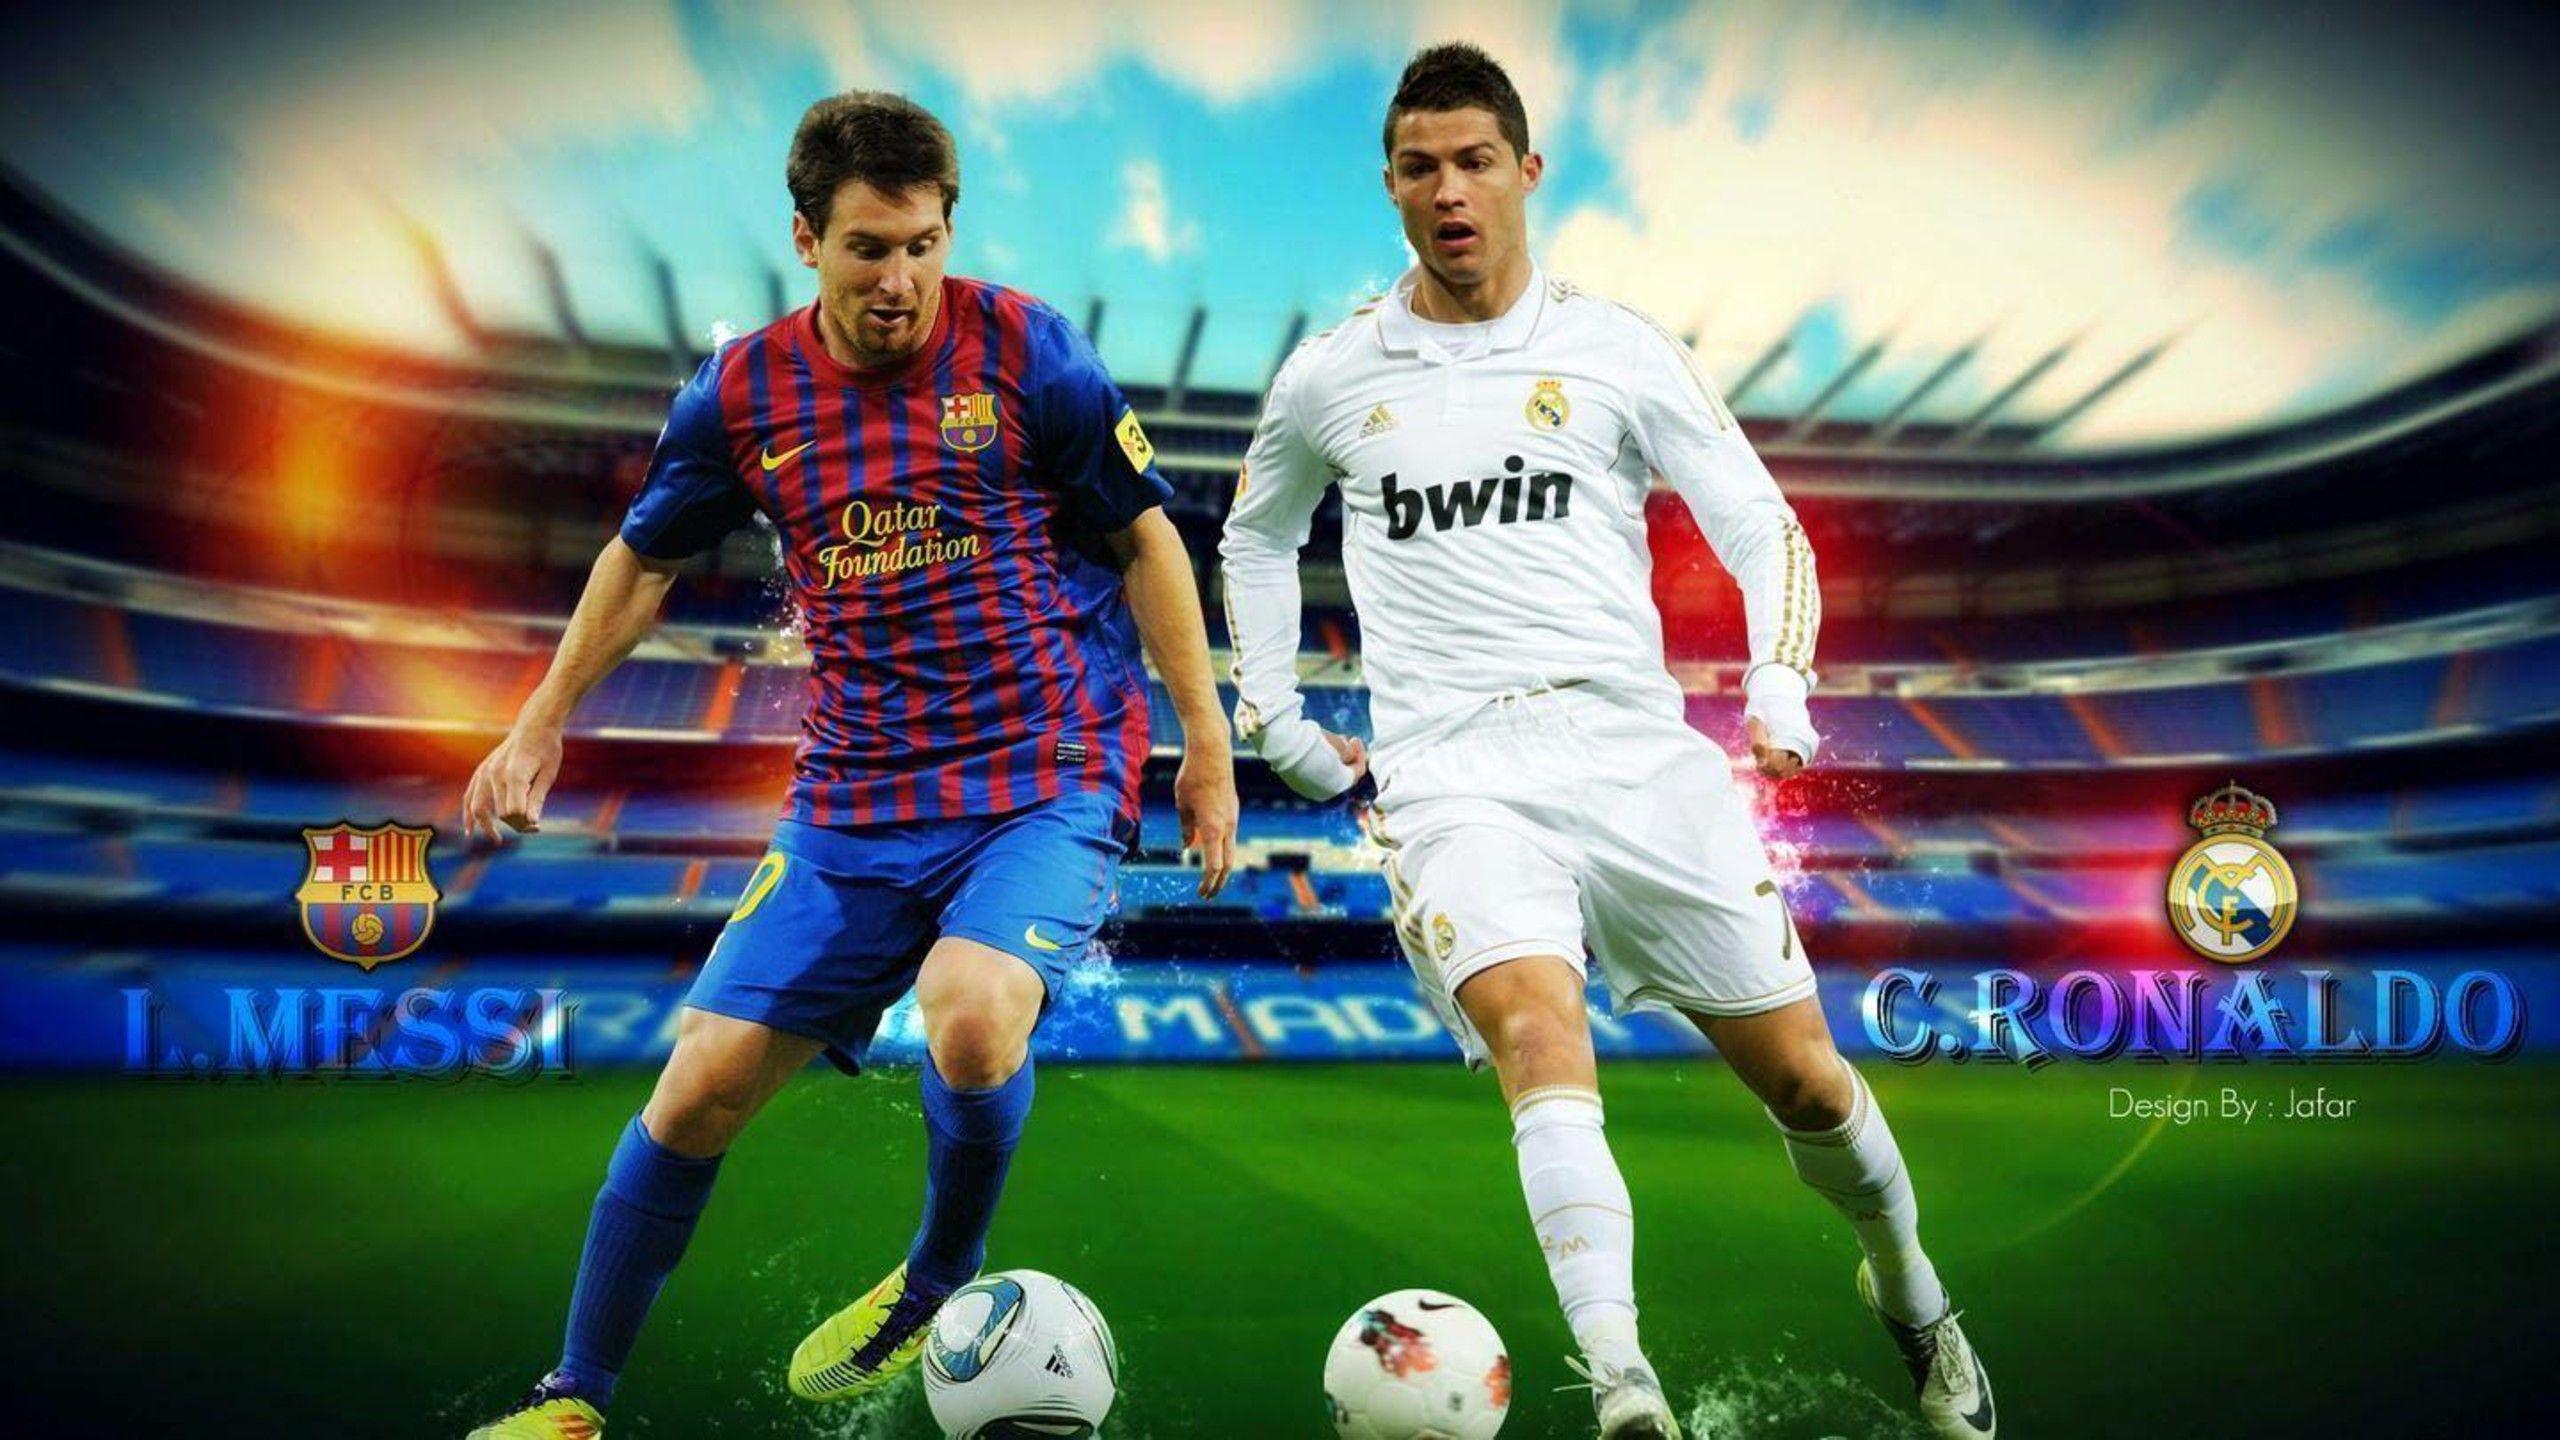 Ronaldo vs. Messi HD Wallpaper Image Fan Tab